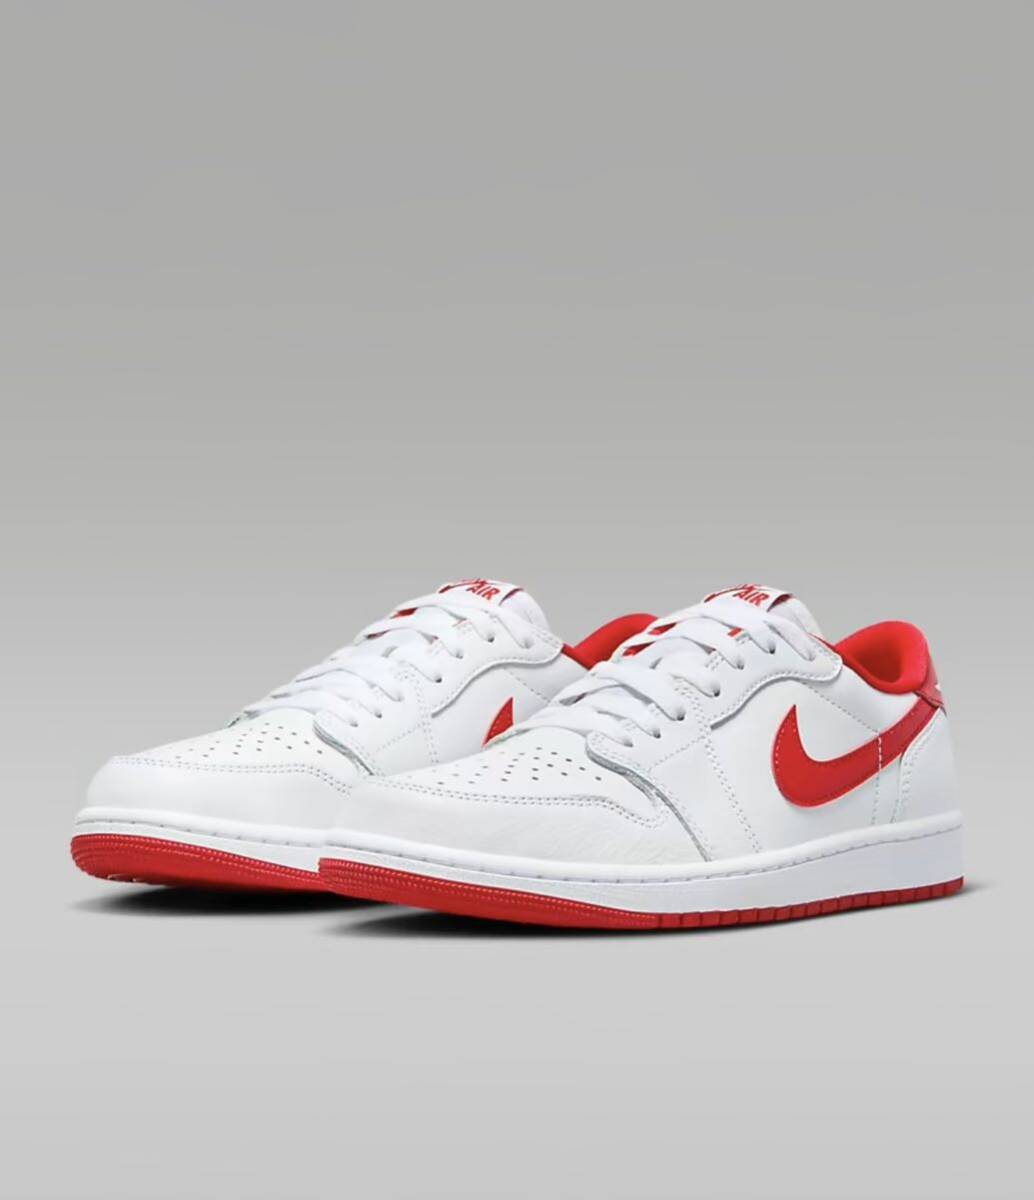 Nike Air Jordan 1 Retro LowOG White and University Redナイキ エアジョーダン1 レトロ ロー OG ホワイト アンド ユニバーシティレッド_画像5